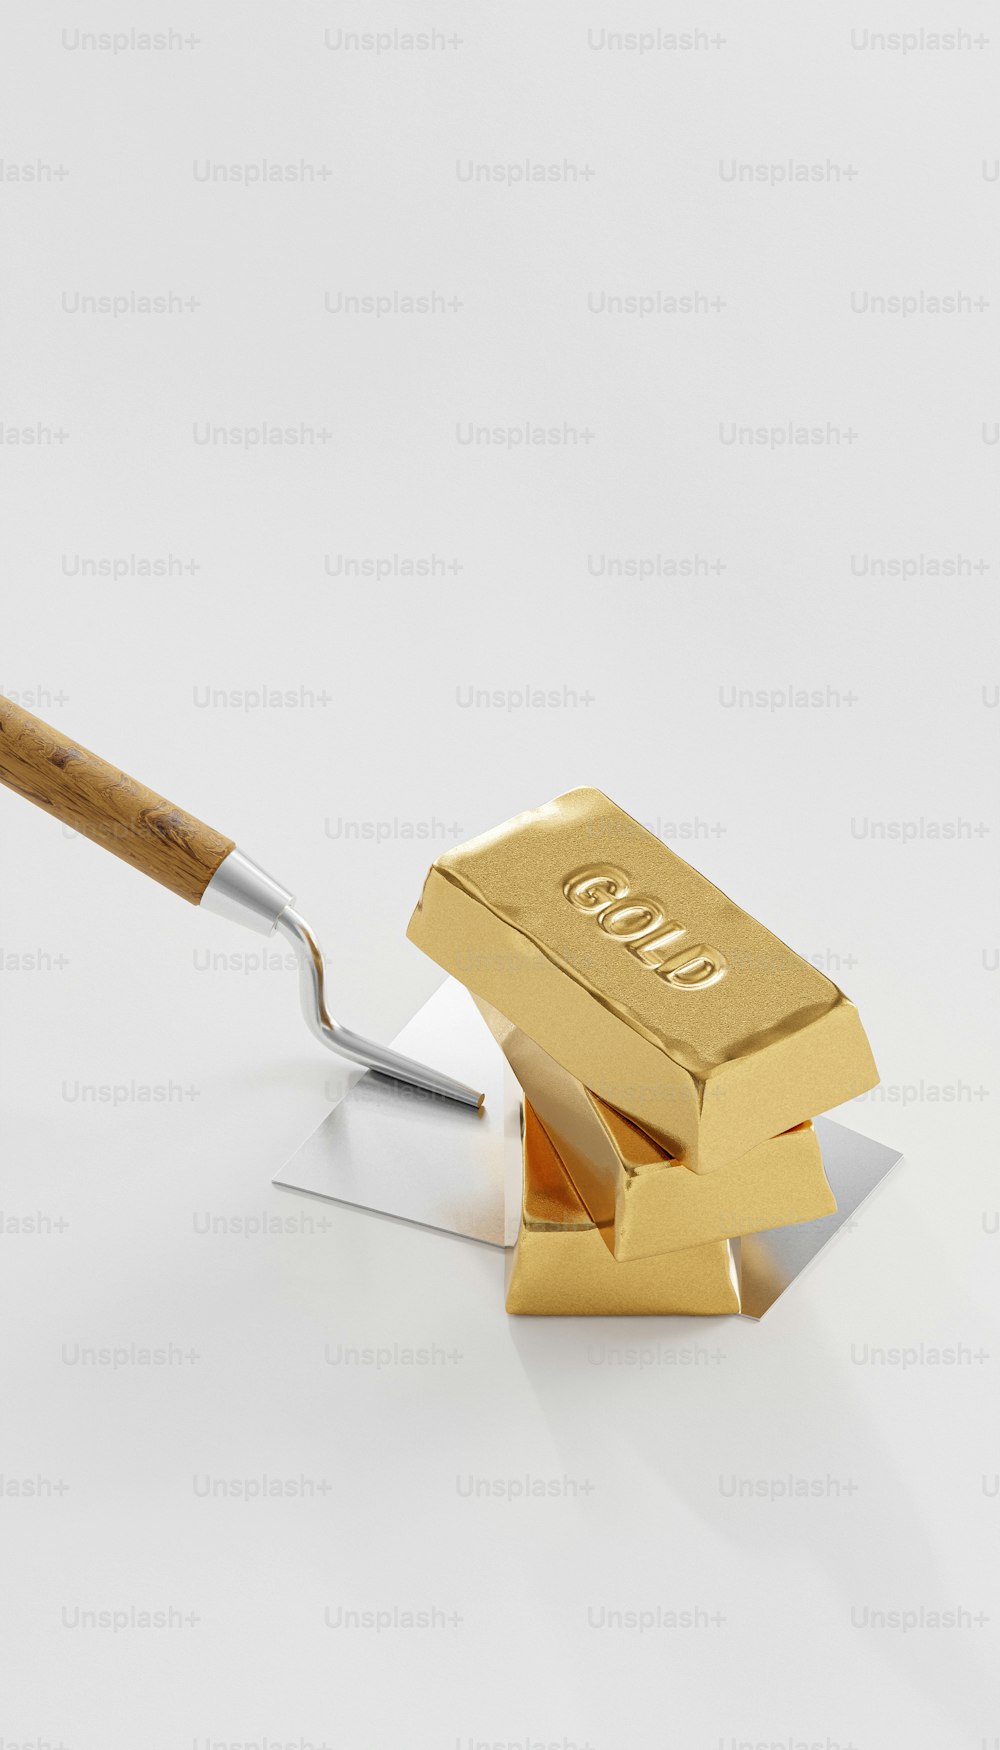 Gold Bar - Dig Out Kit